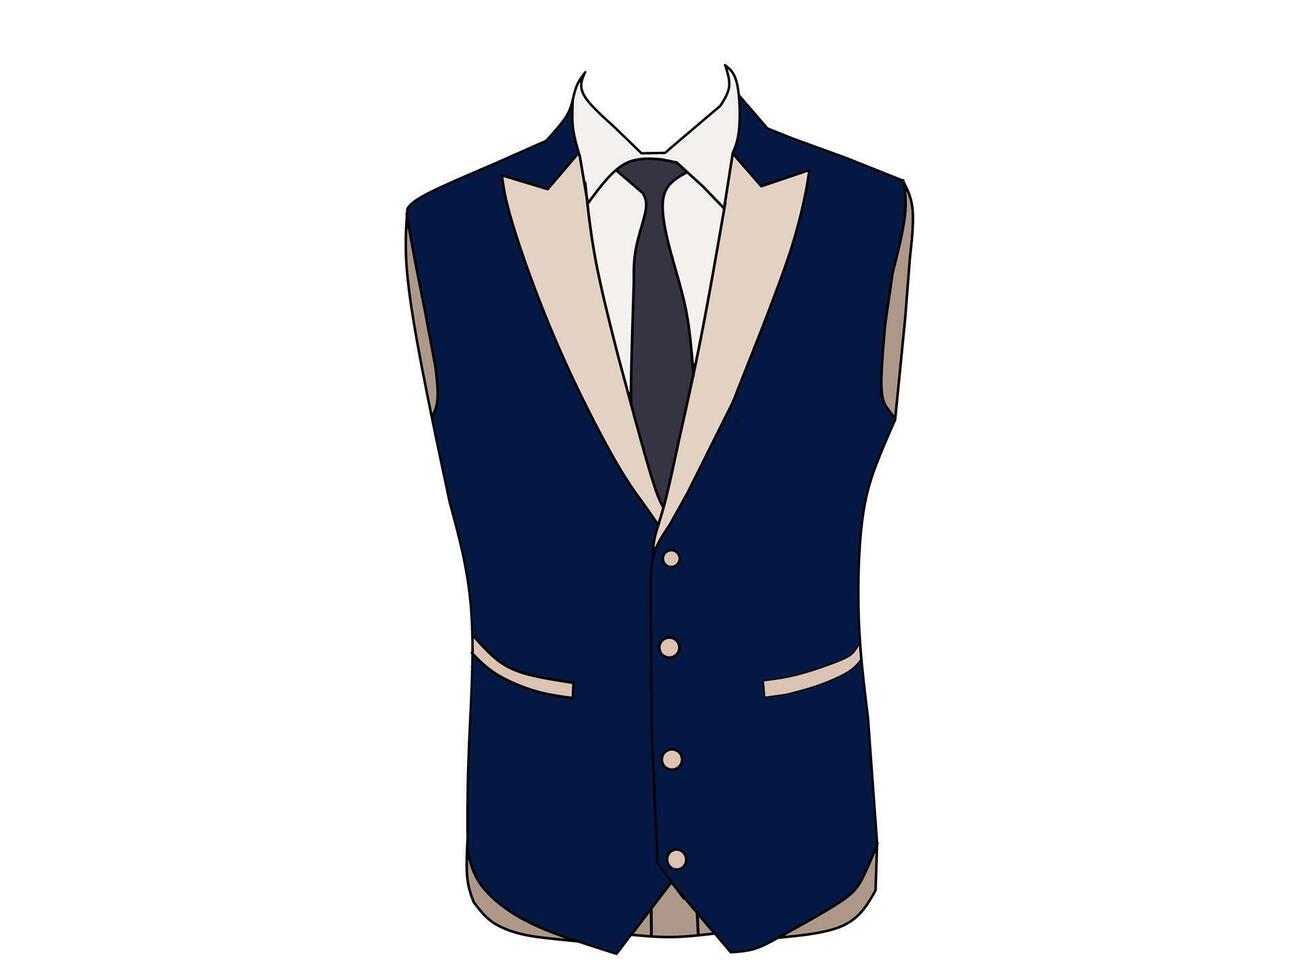 Vector illustration about blue color vest formal wear background. Men's fashion formal wear theme vector concept.